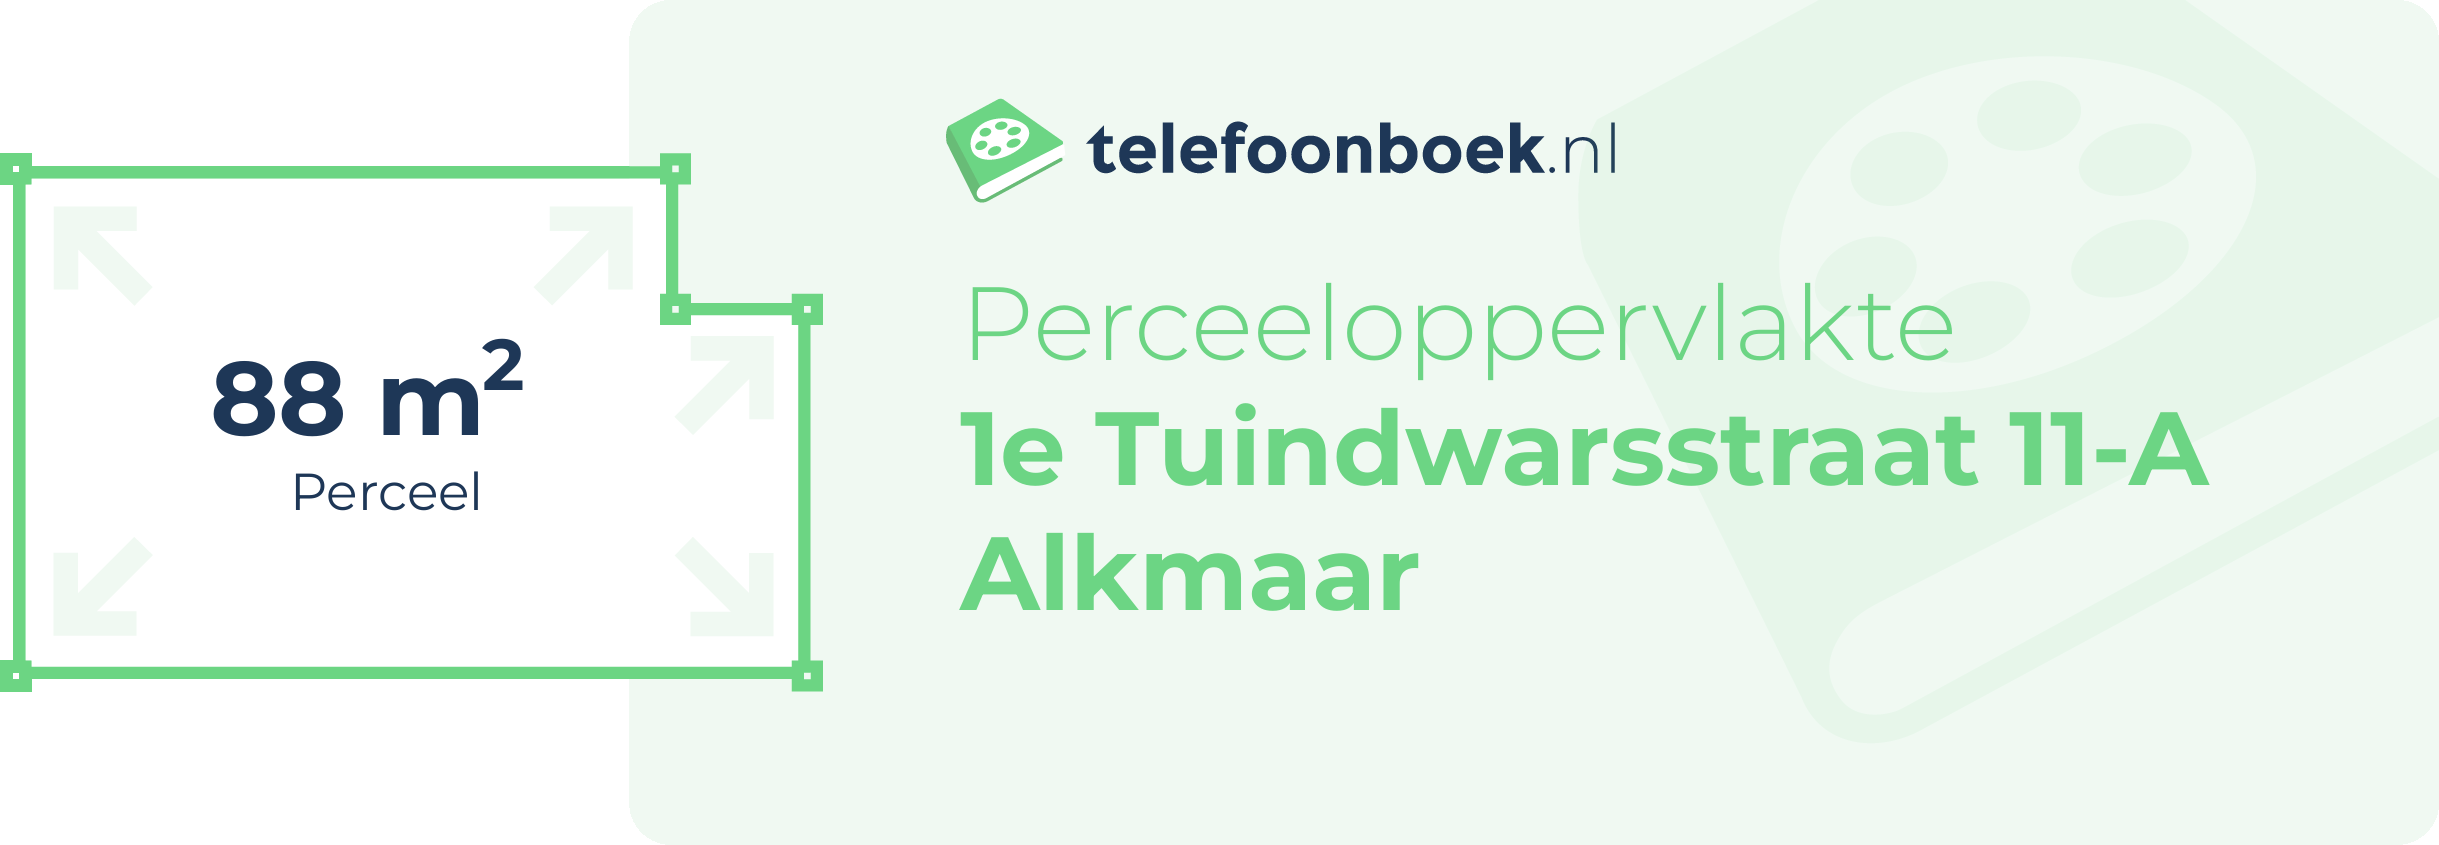 Perceeloppervlakte 1e Tuindwarsstraat 11-A Alkmaar